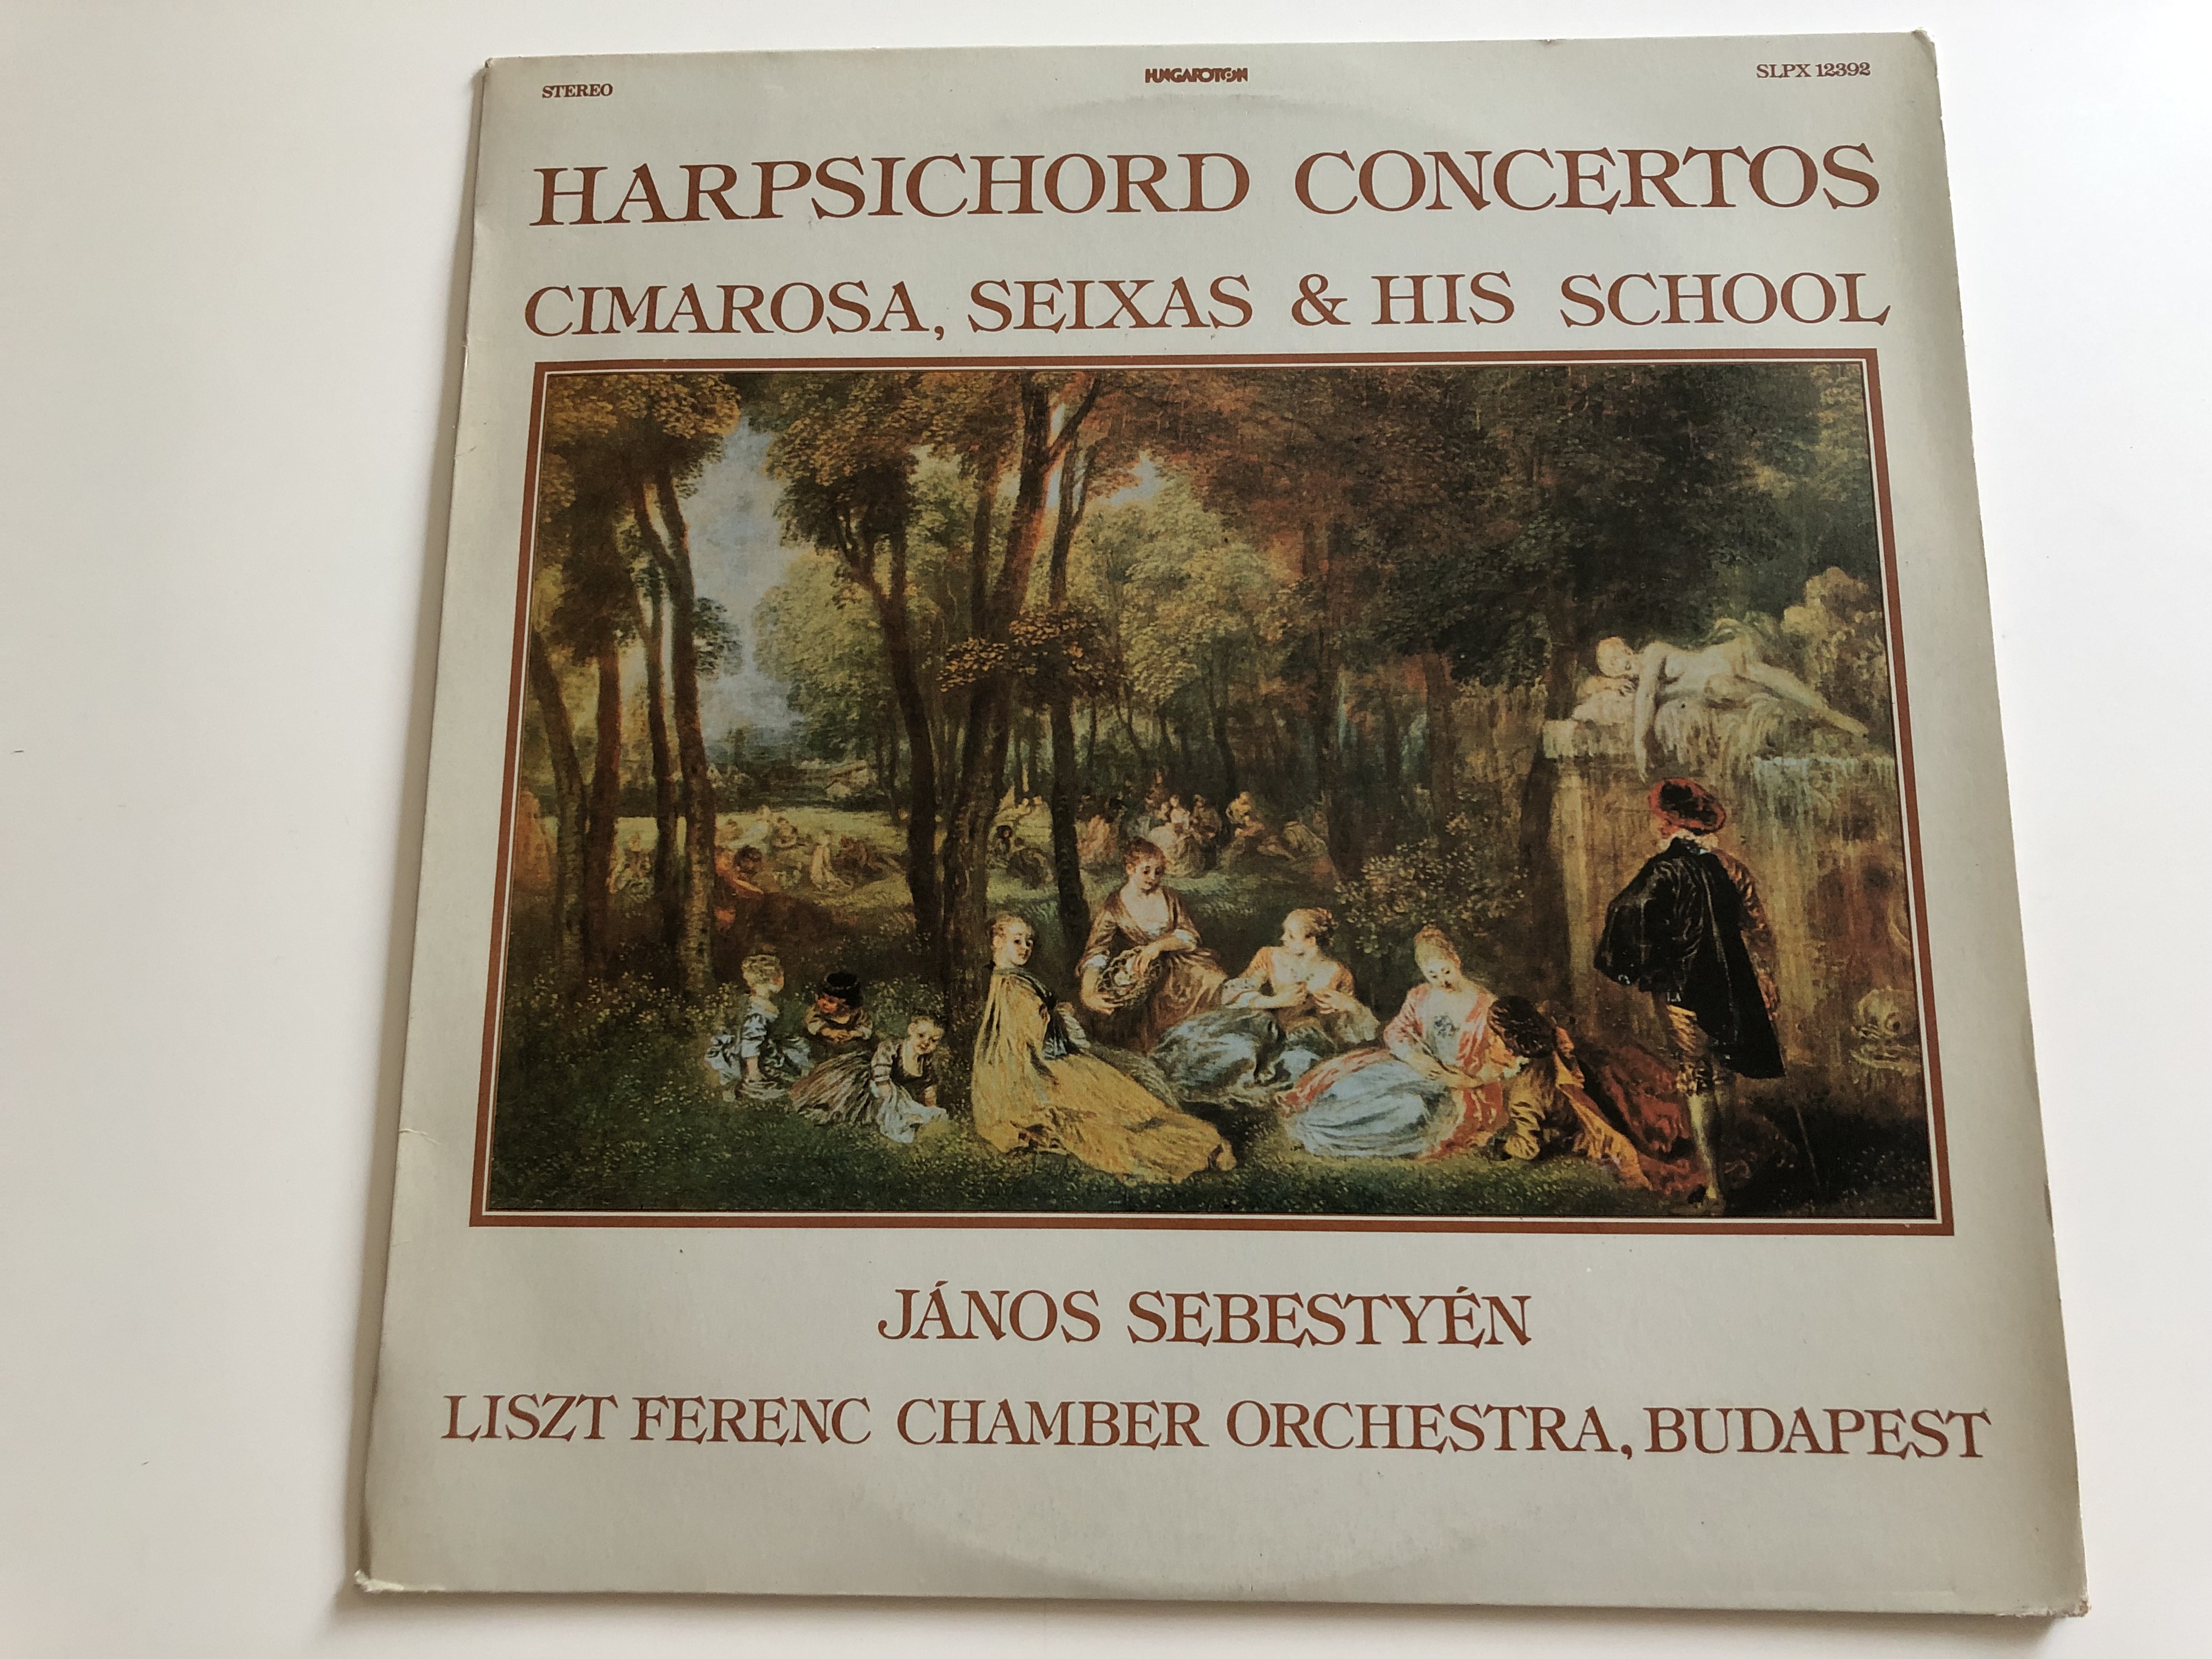 harpsichord-concertos-cimarosa-seixas-his-school-conducted-j-nos-sebesty-n-liszt-ferenc-chamber-orchestra-budapest-hungaroton-lp-stereo-slpx-12392-1-.jpg